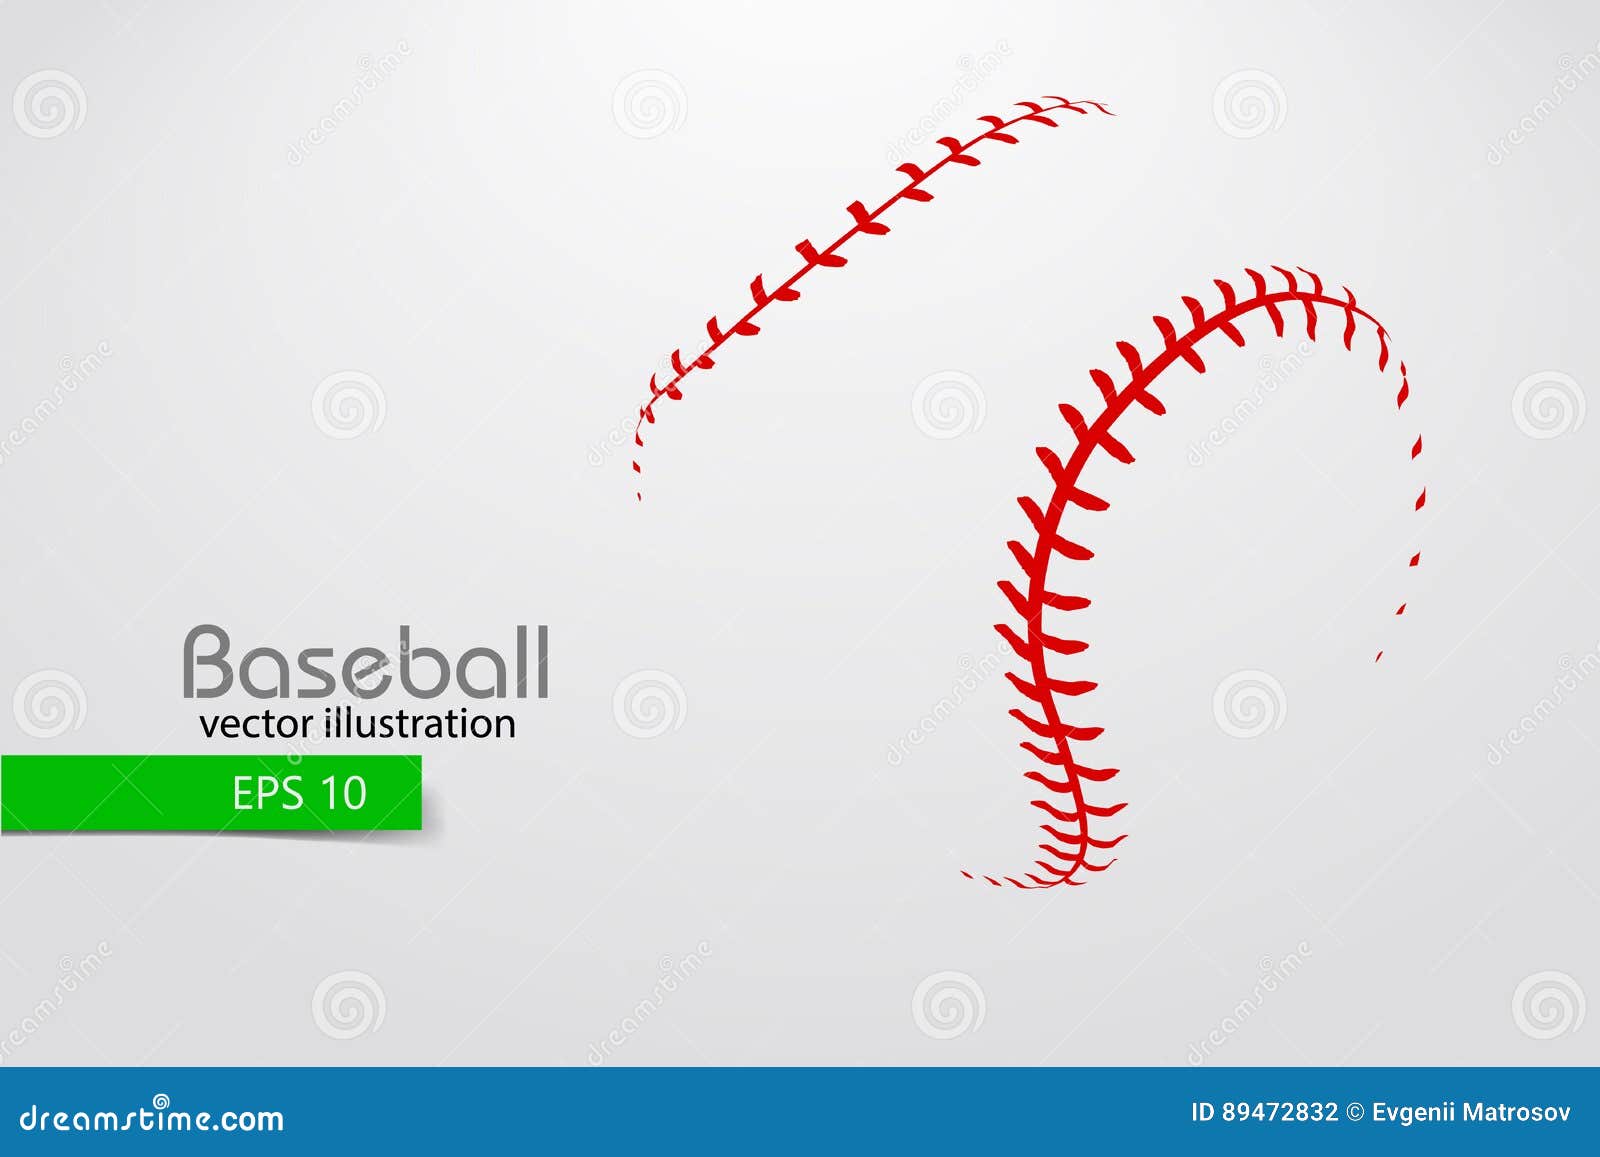 silhouette of a baseball ball.  